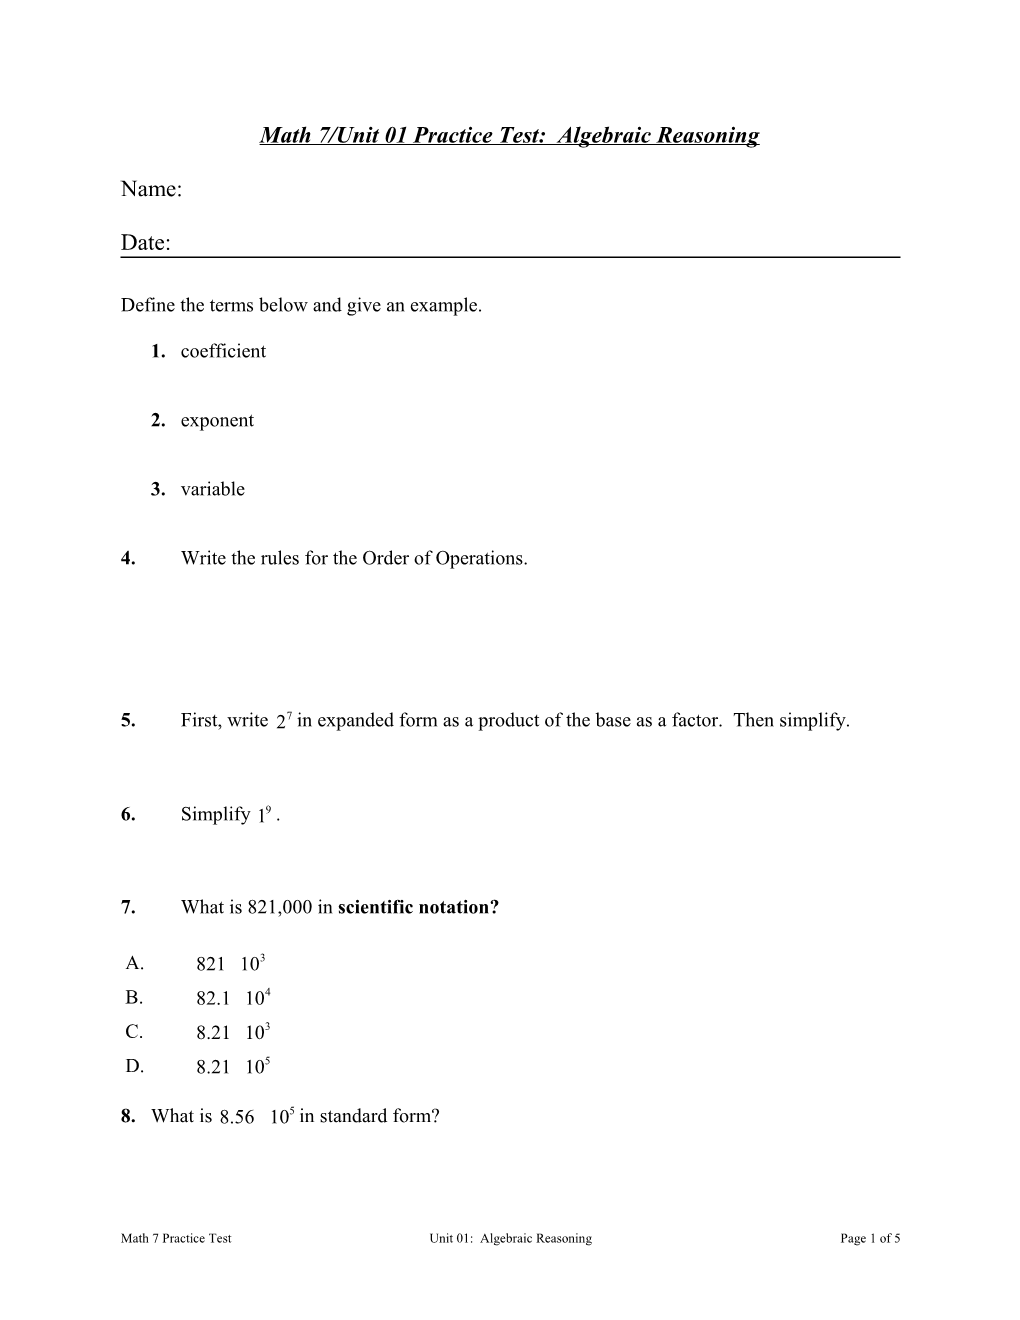 Math 7/Unit 01 Practice Test: Algebraic Reasoning